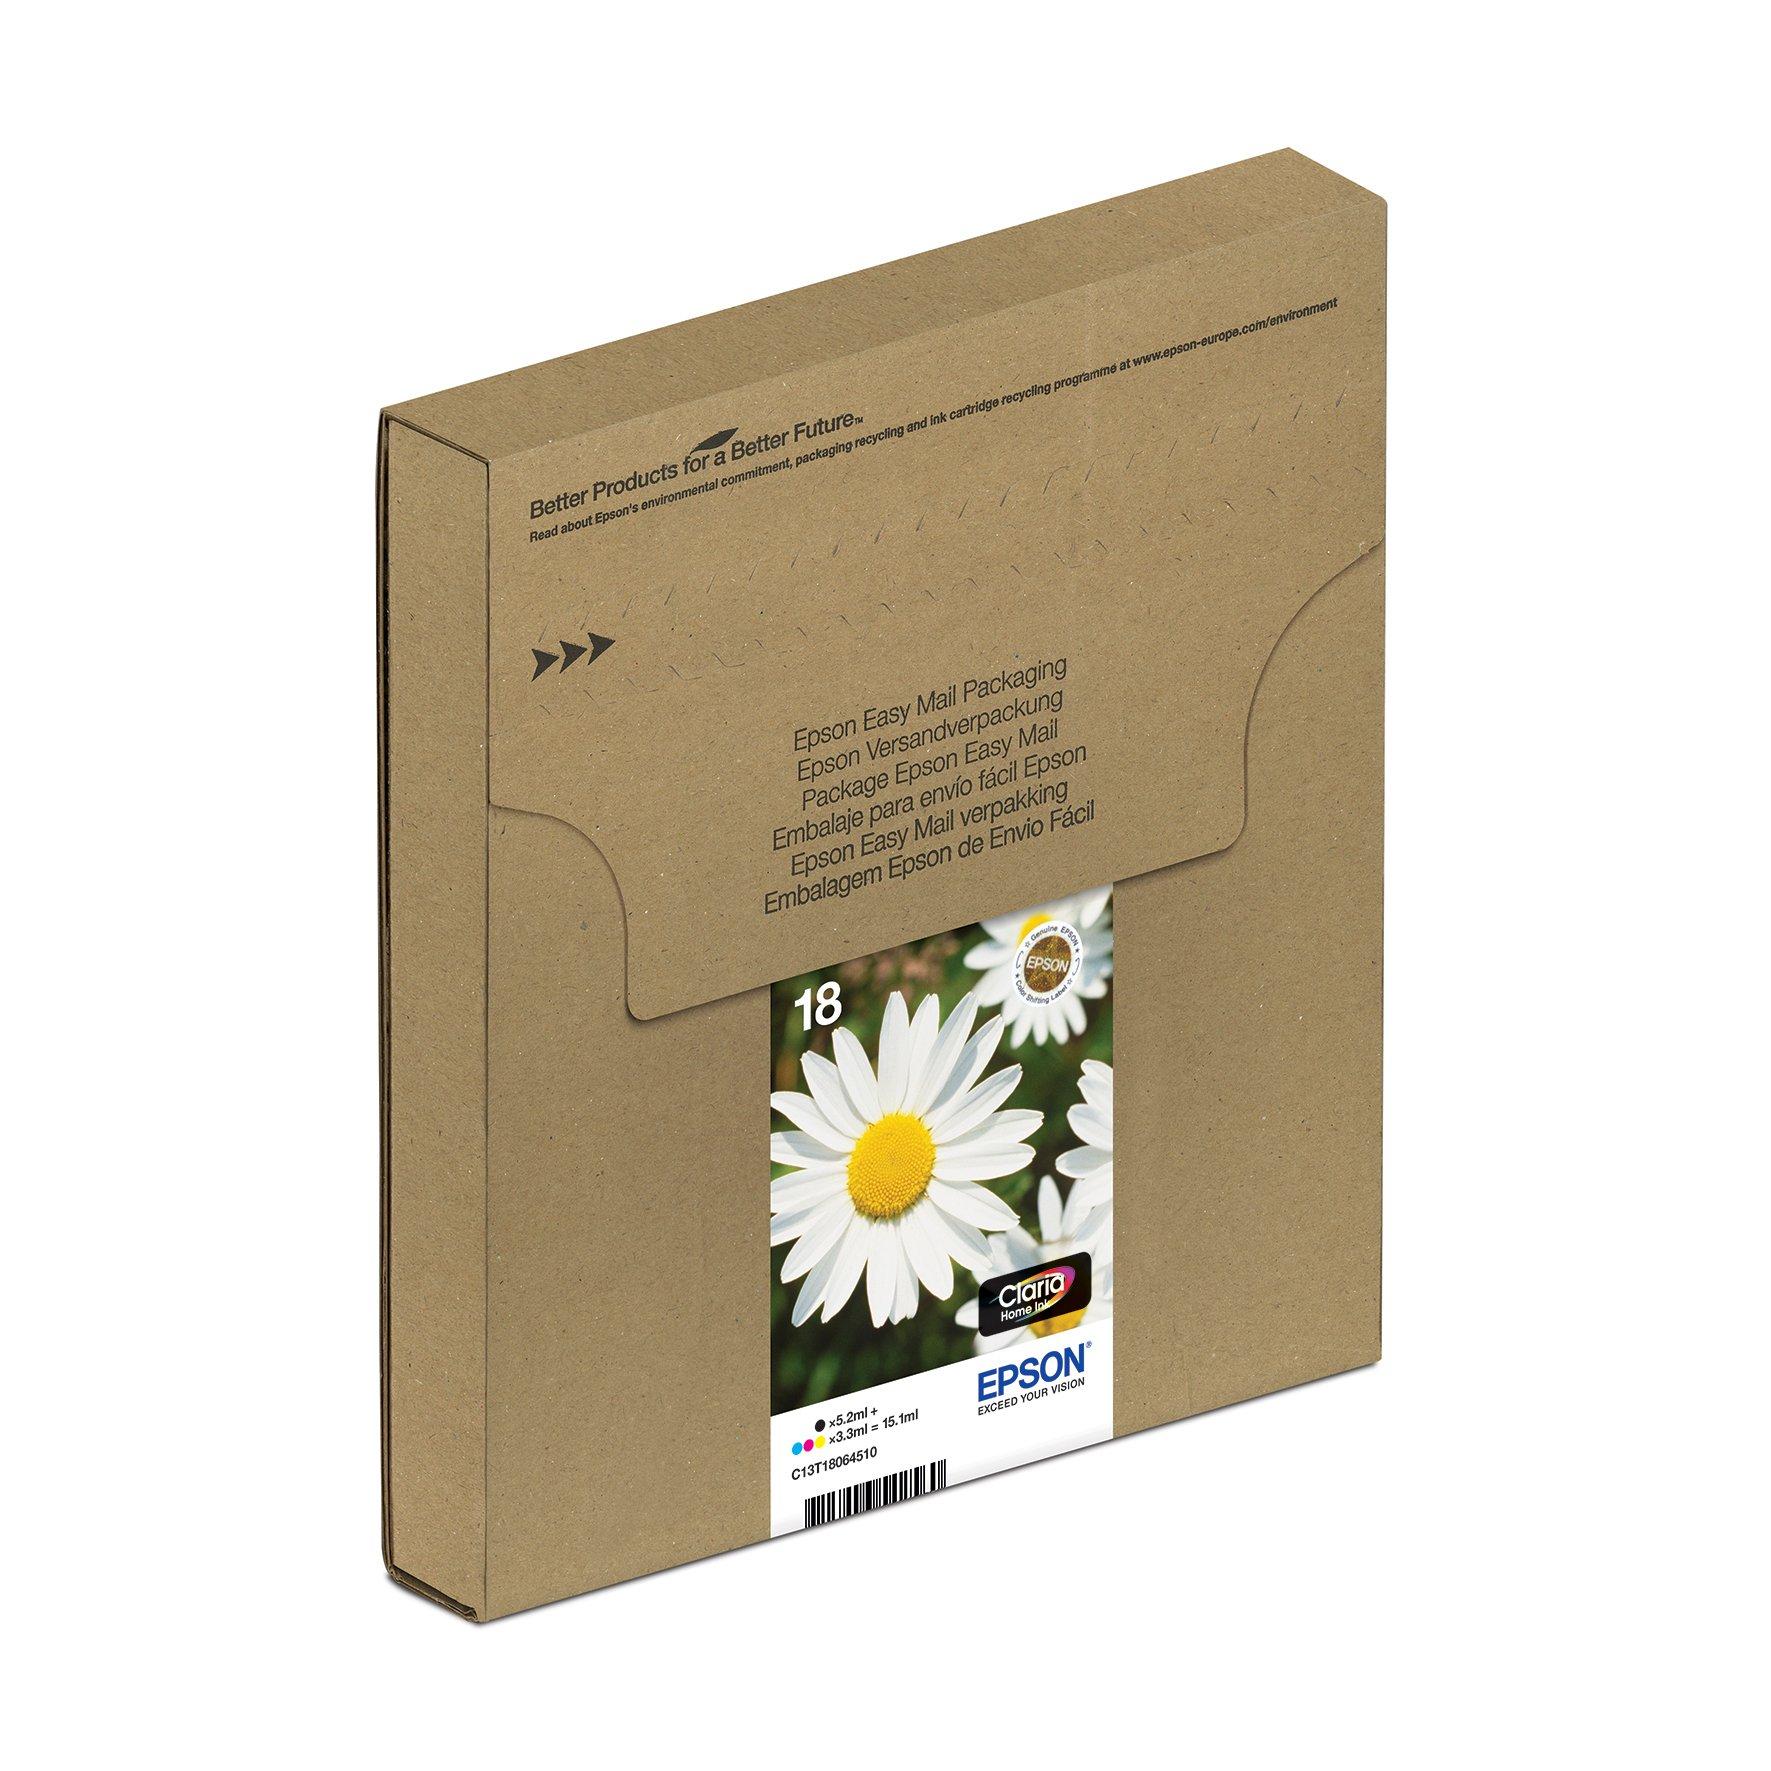 & EasyMail | Produkte Multipack Farben Claria Österreich Tintenpatronen Gänseblume Epson Tinte | Papier | | Home 4 18 Tinte